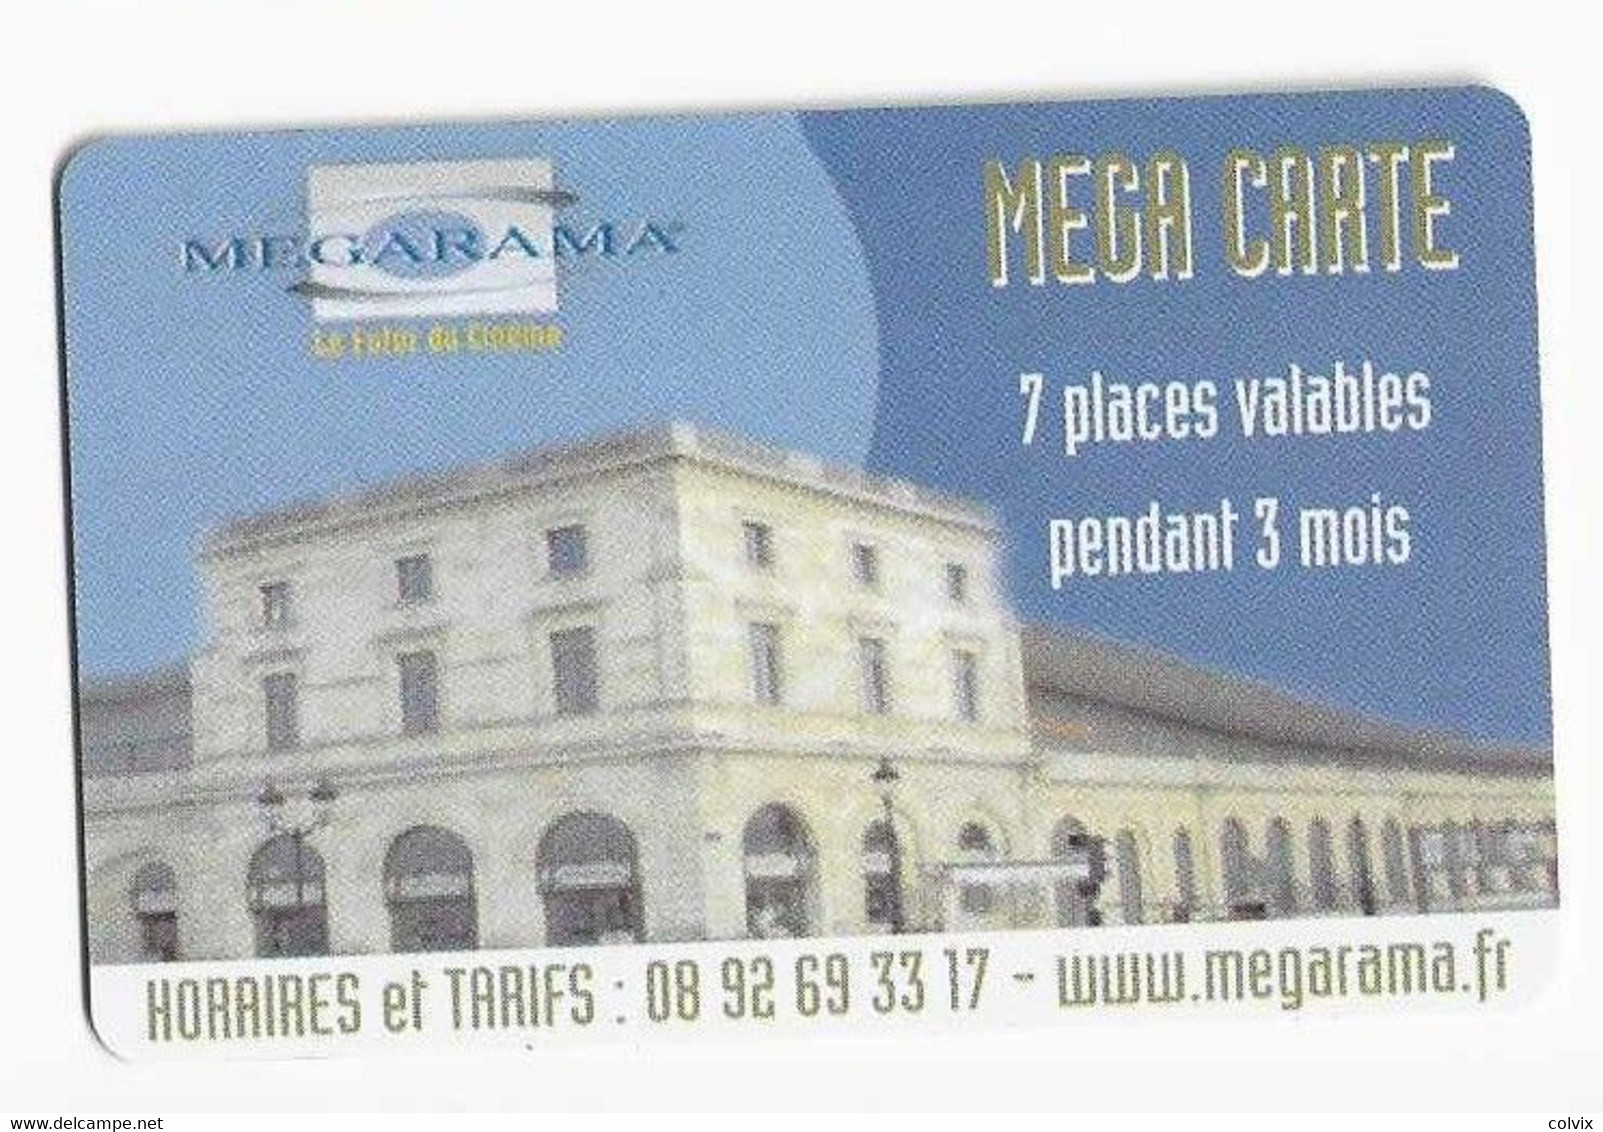 FRANCE CARTE CINEMA MEGARAMA BORDEAUX - Movie Cards